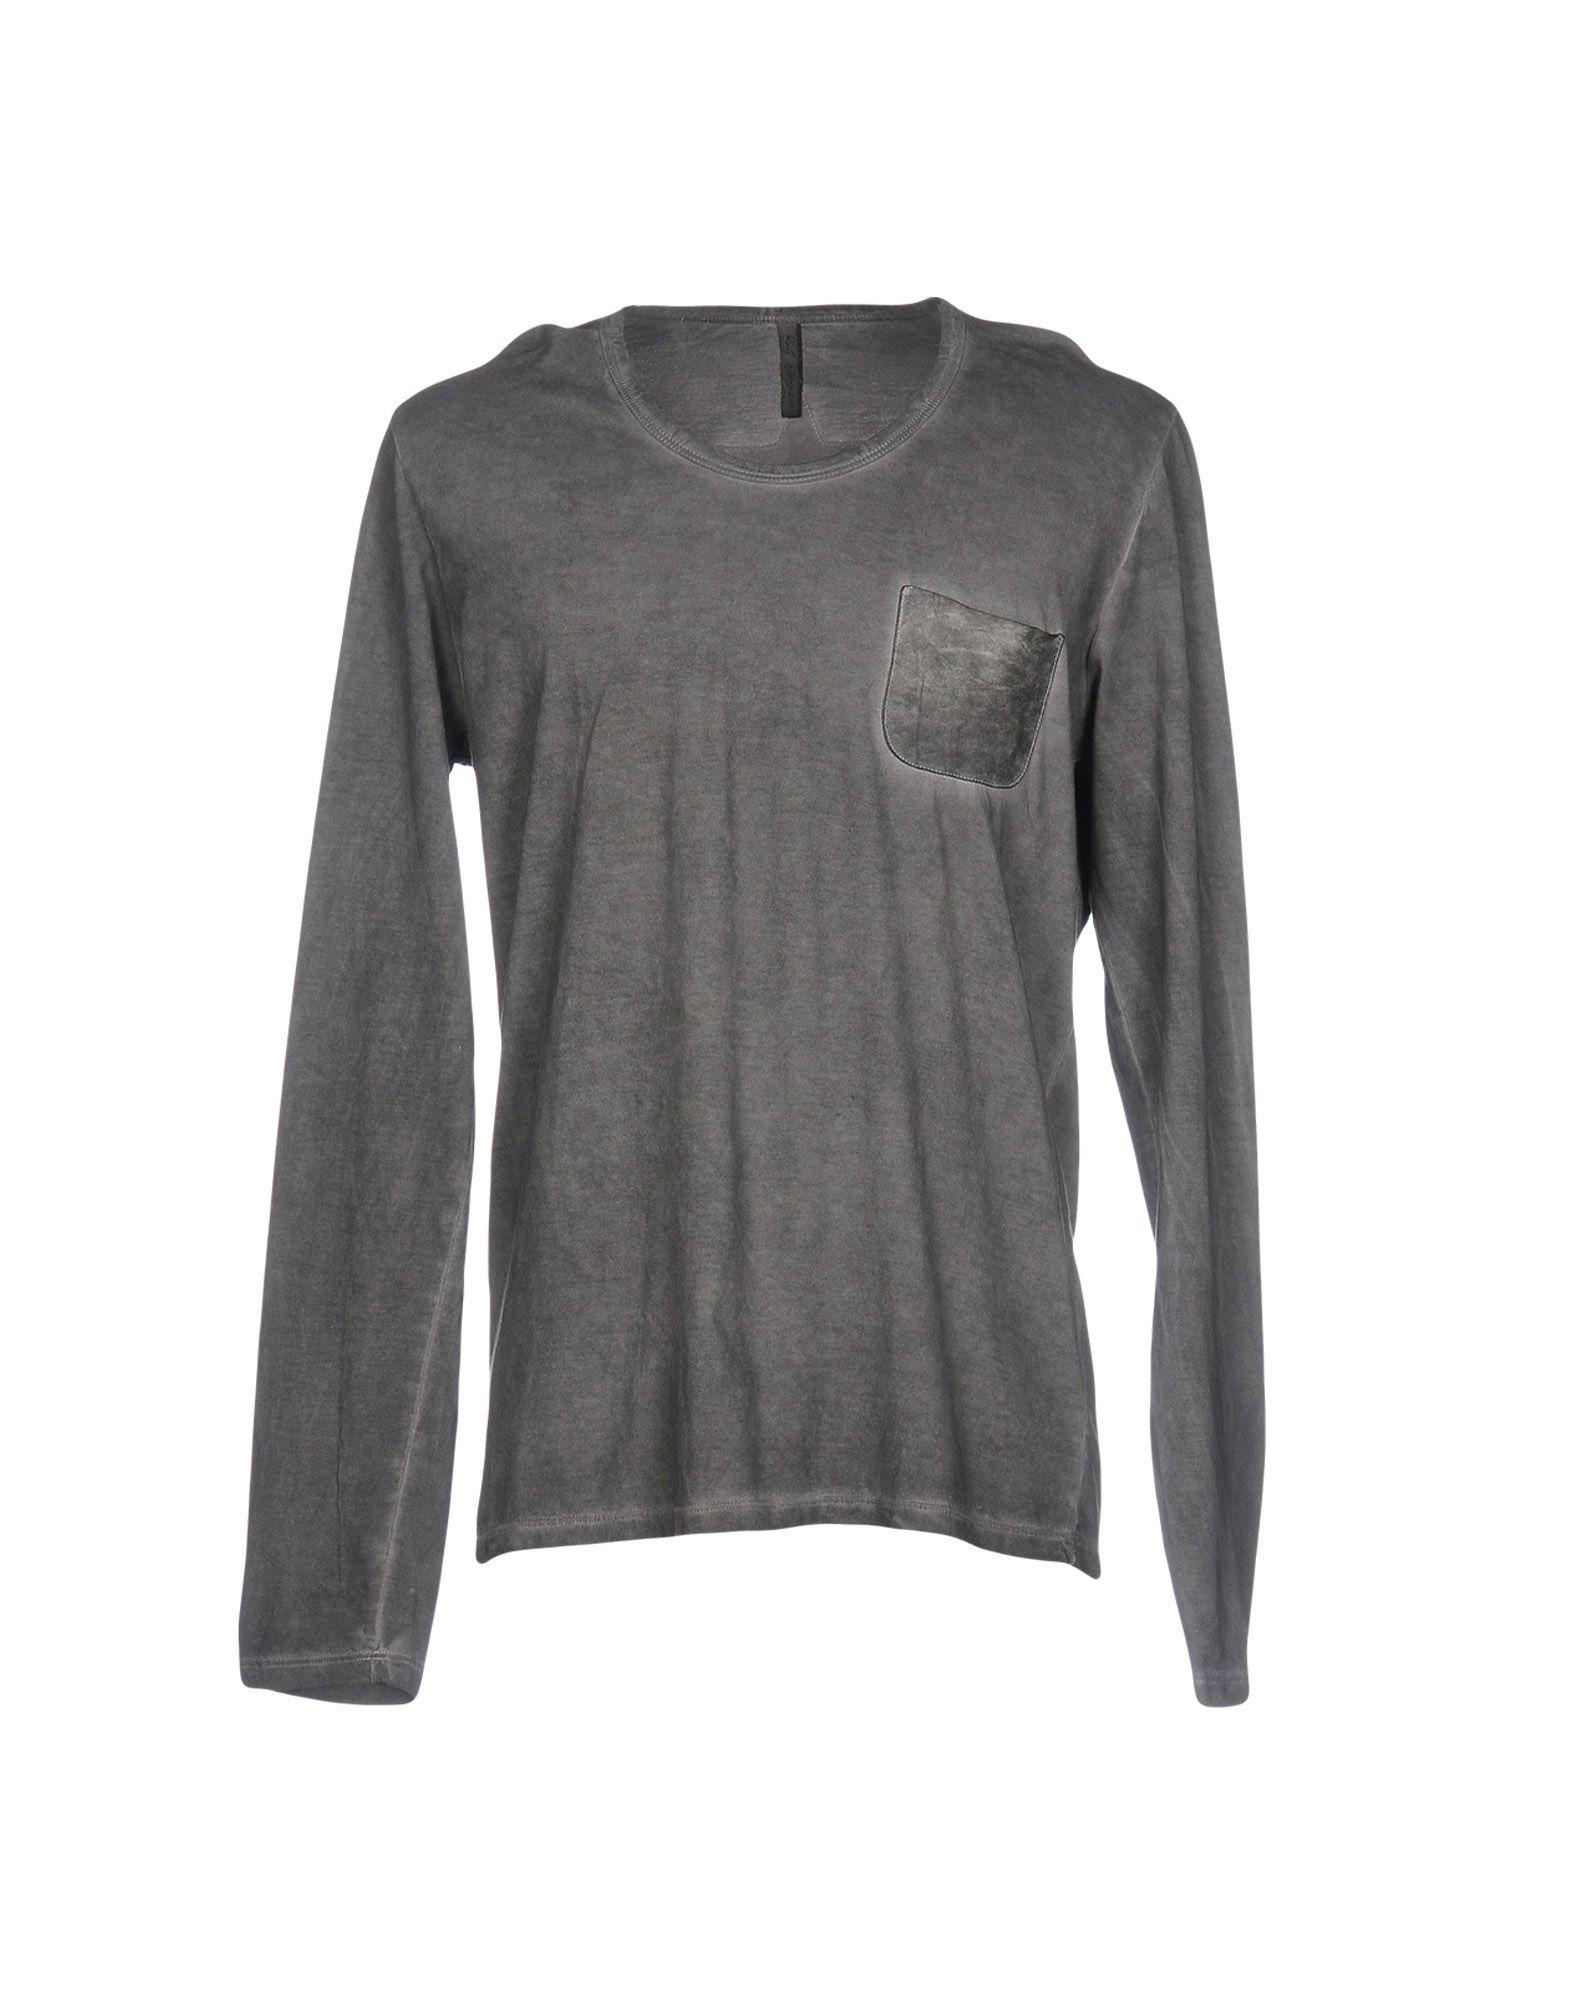 Lyst - Wlg By Giorgio Brato T-shirt in Gray for Men